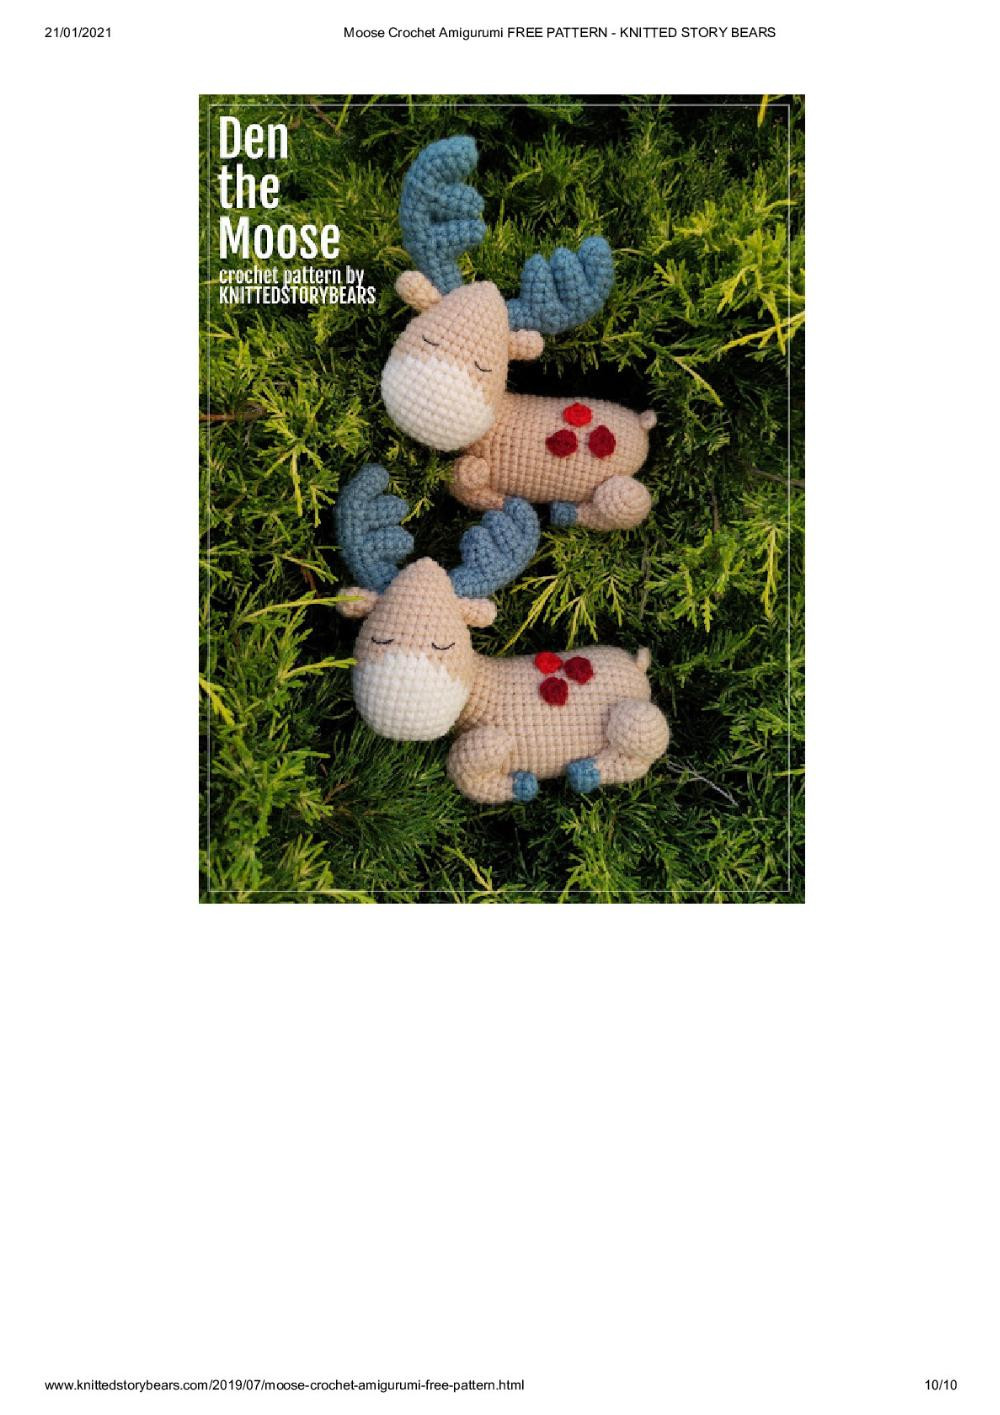 moose crochet amigurumi free pattern